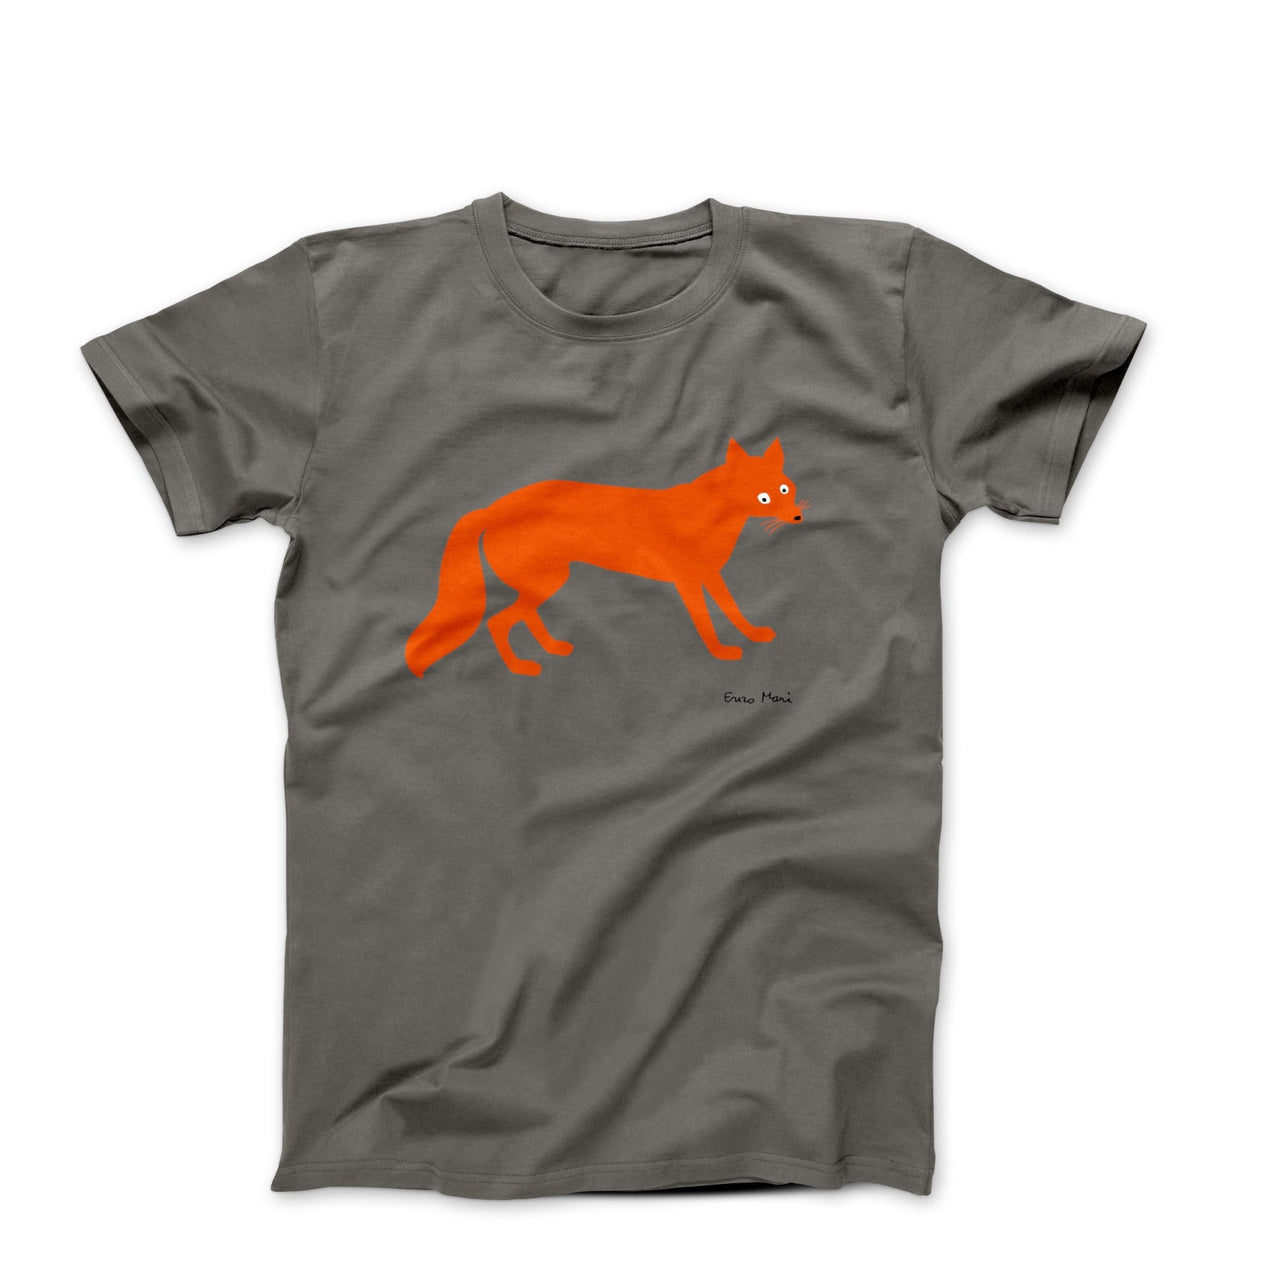 Enzo Mari La Volpe (The Fox) 1965 Art T-shirt - Clothing - Harvey Ltd